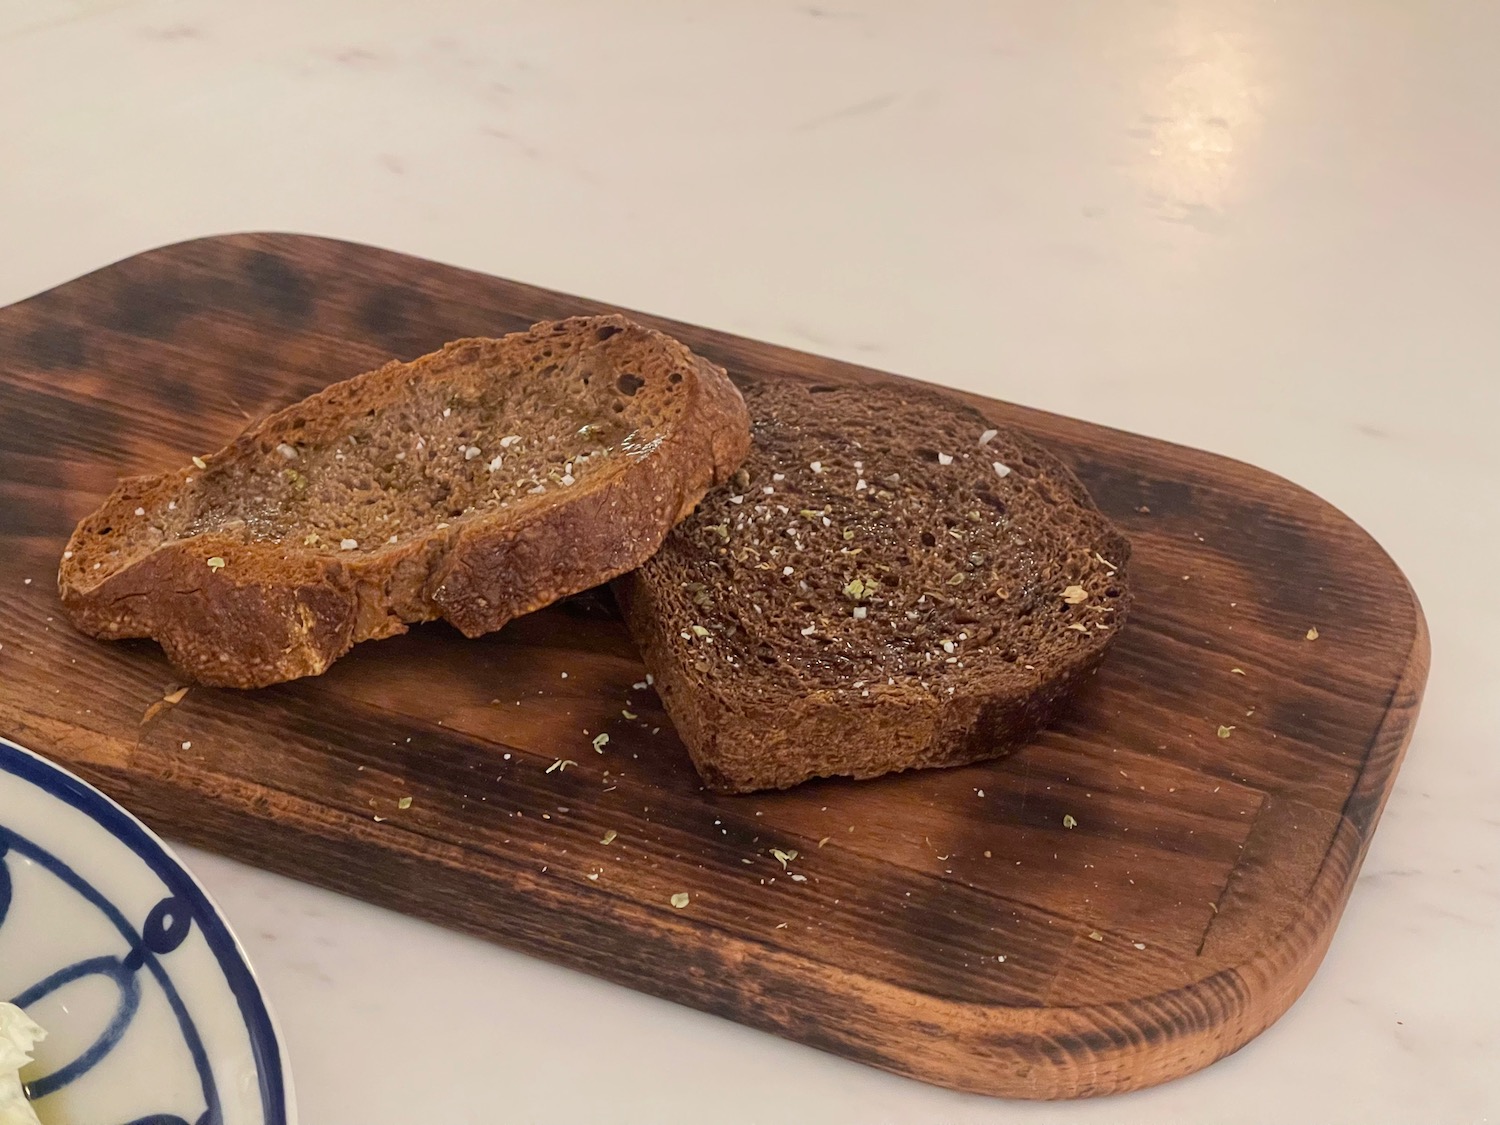 a piece of bread on a cutting board